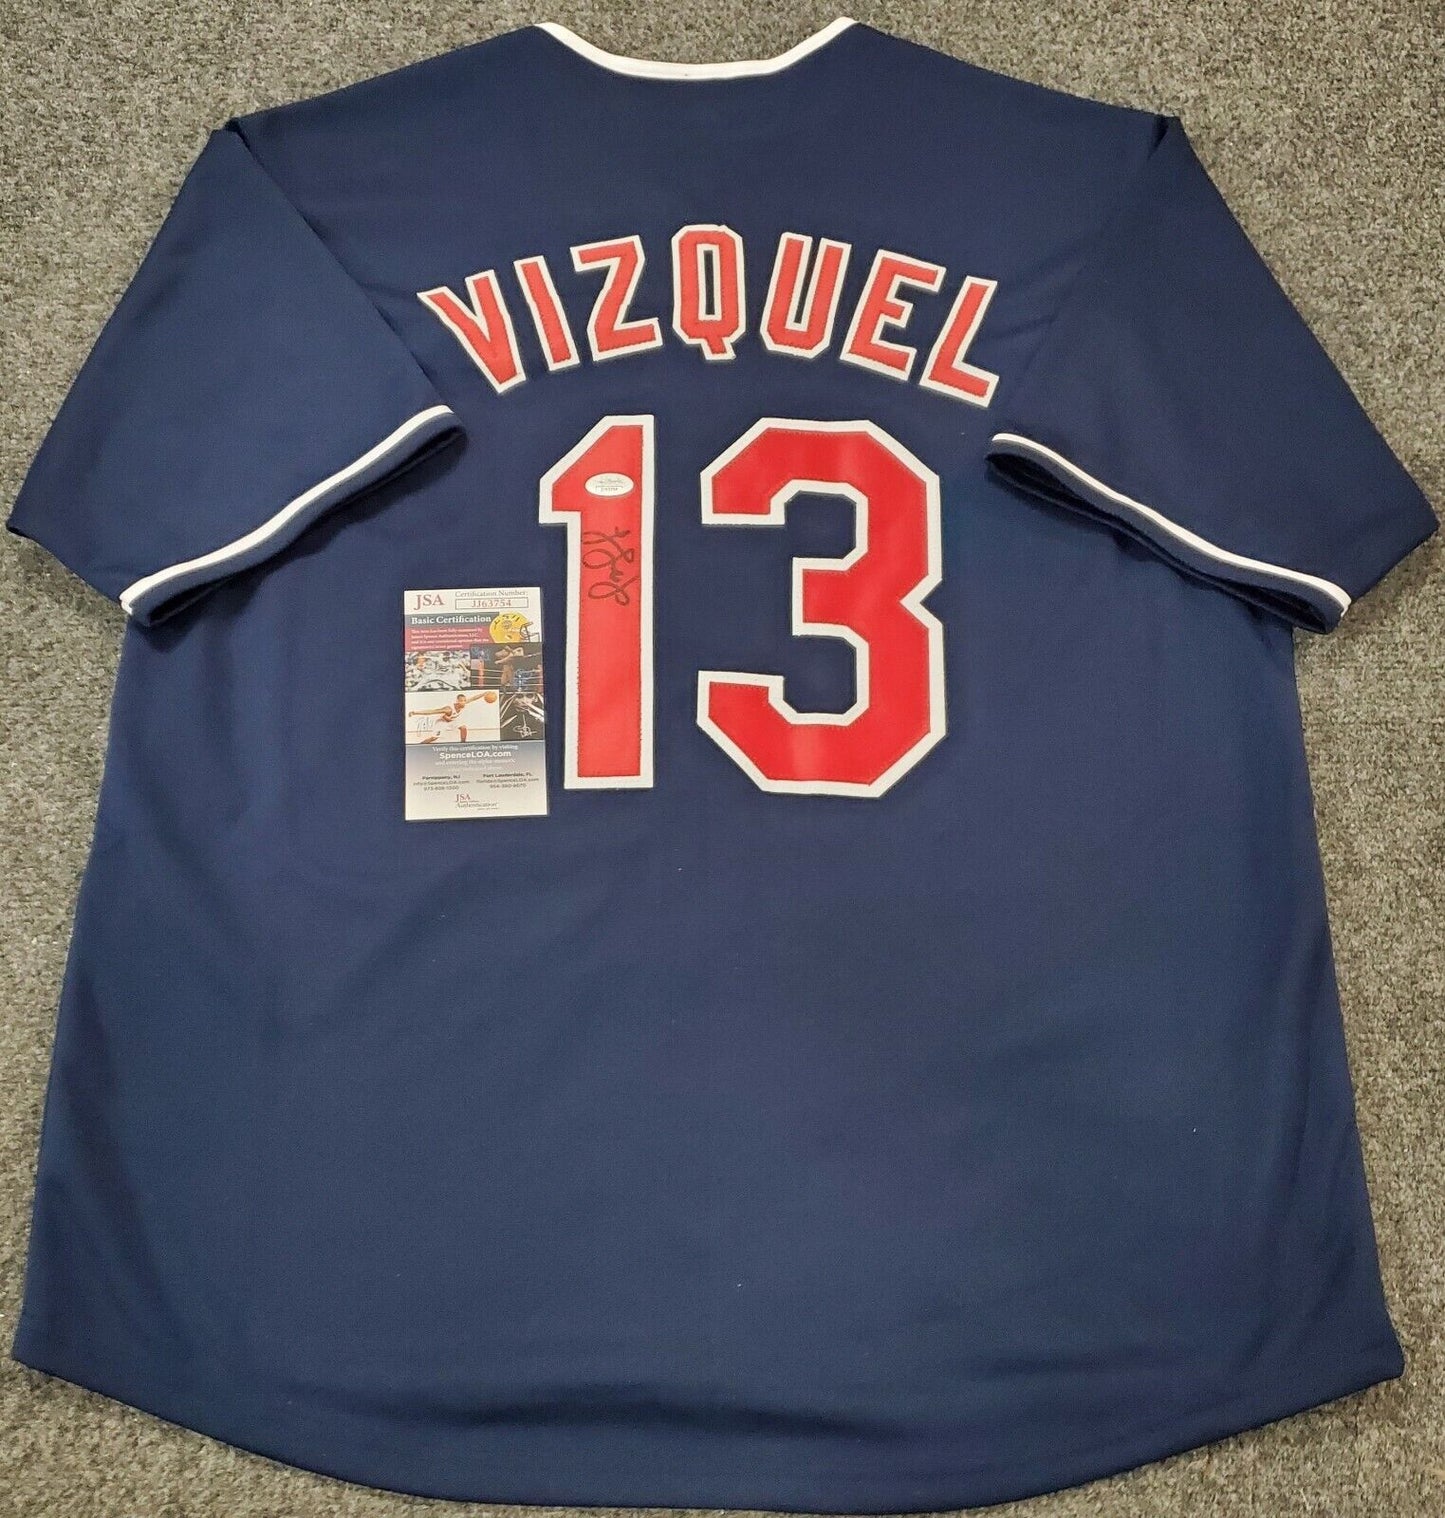 MVP Authentics Cleveland Indians Omar Vizquel Autographed Jersey Jsa Coa 125.10 sports jersey framing , jersey framing